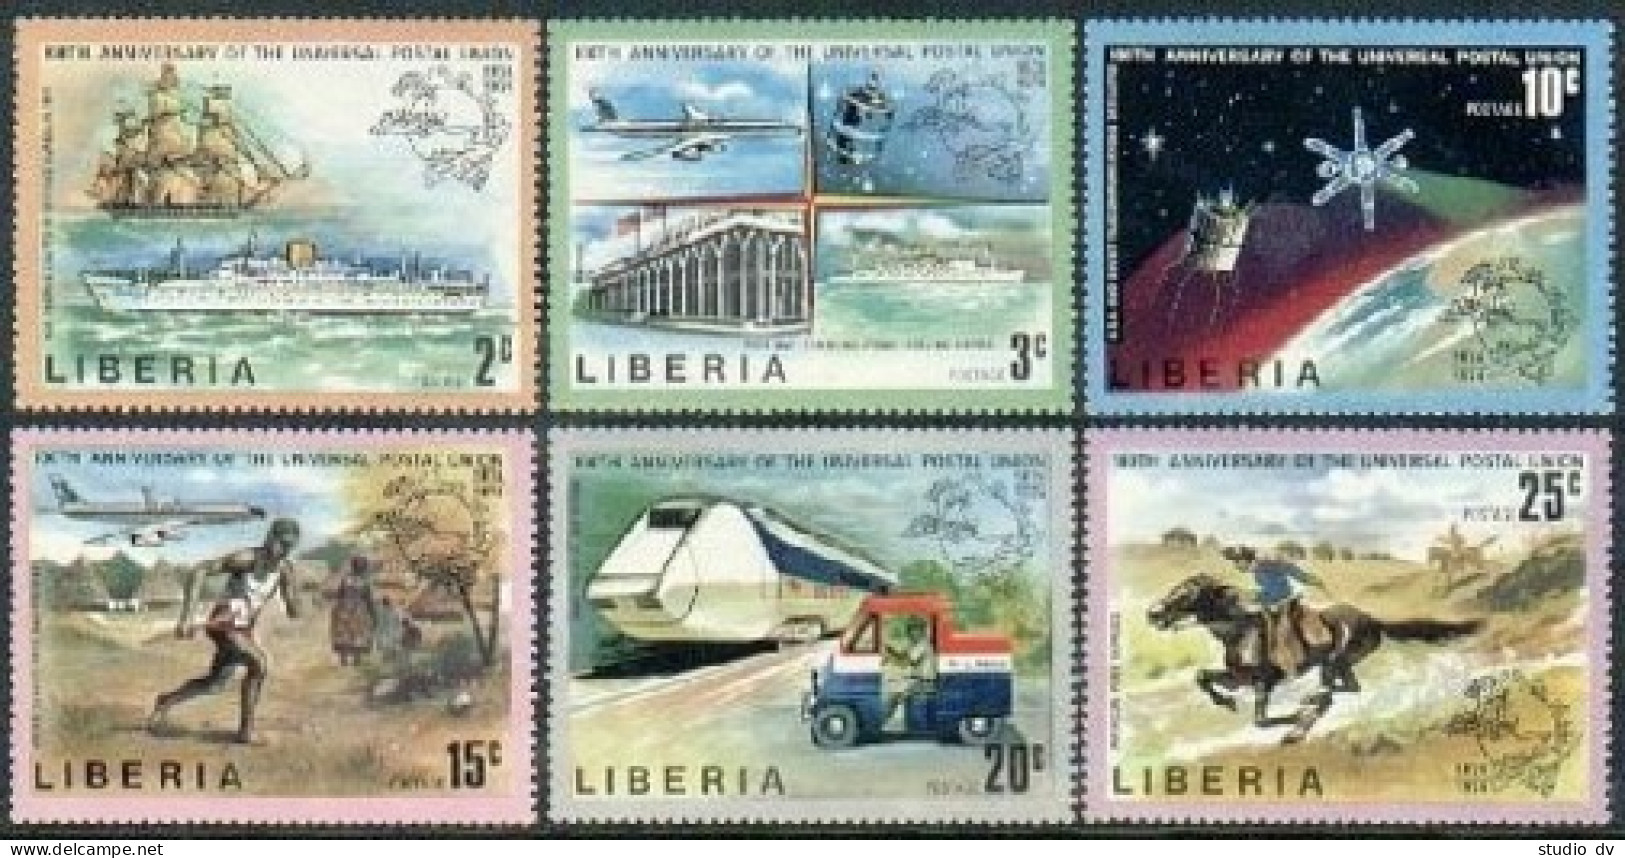 Liberia 663-668,MNH. UPU-100,1974. Ships,Jet,Coach,Space,Pony Express, Space. - Liberia